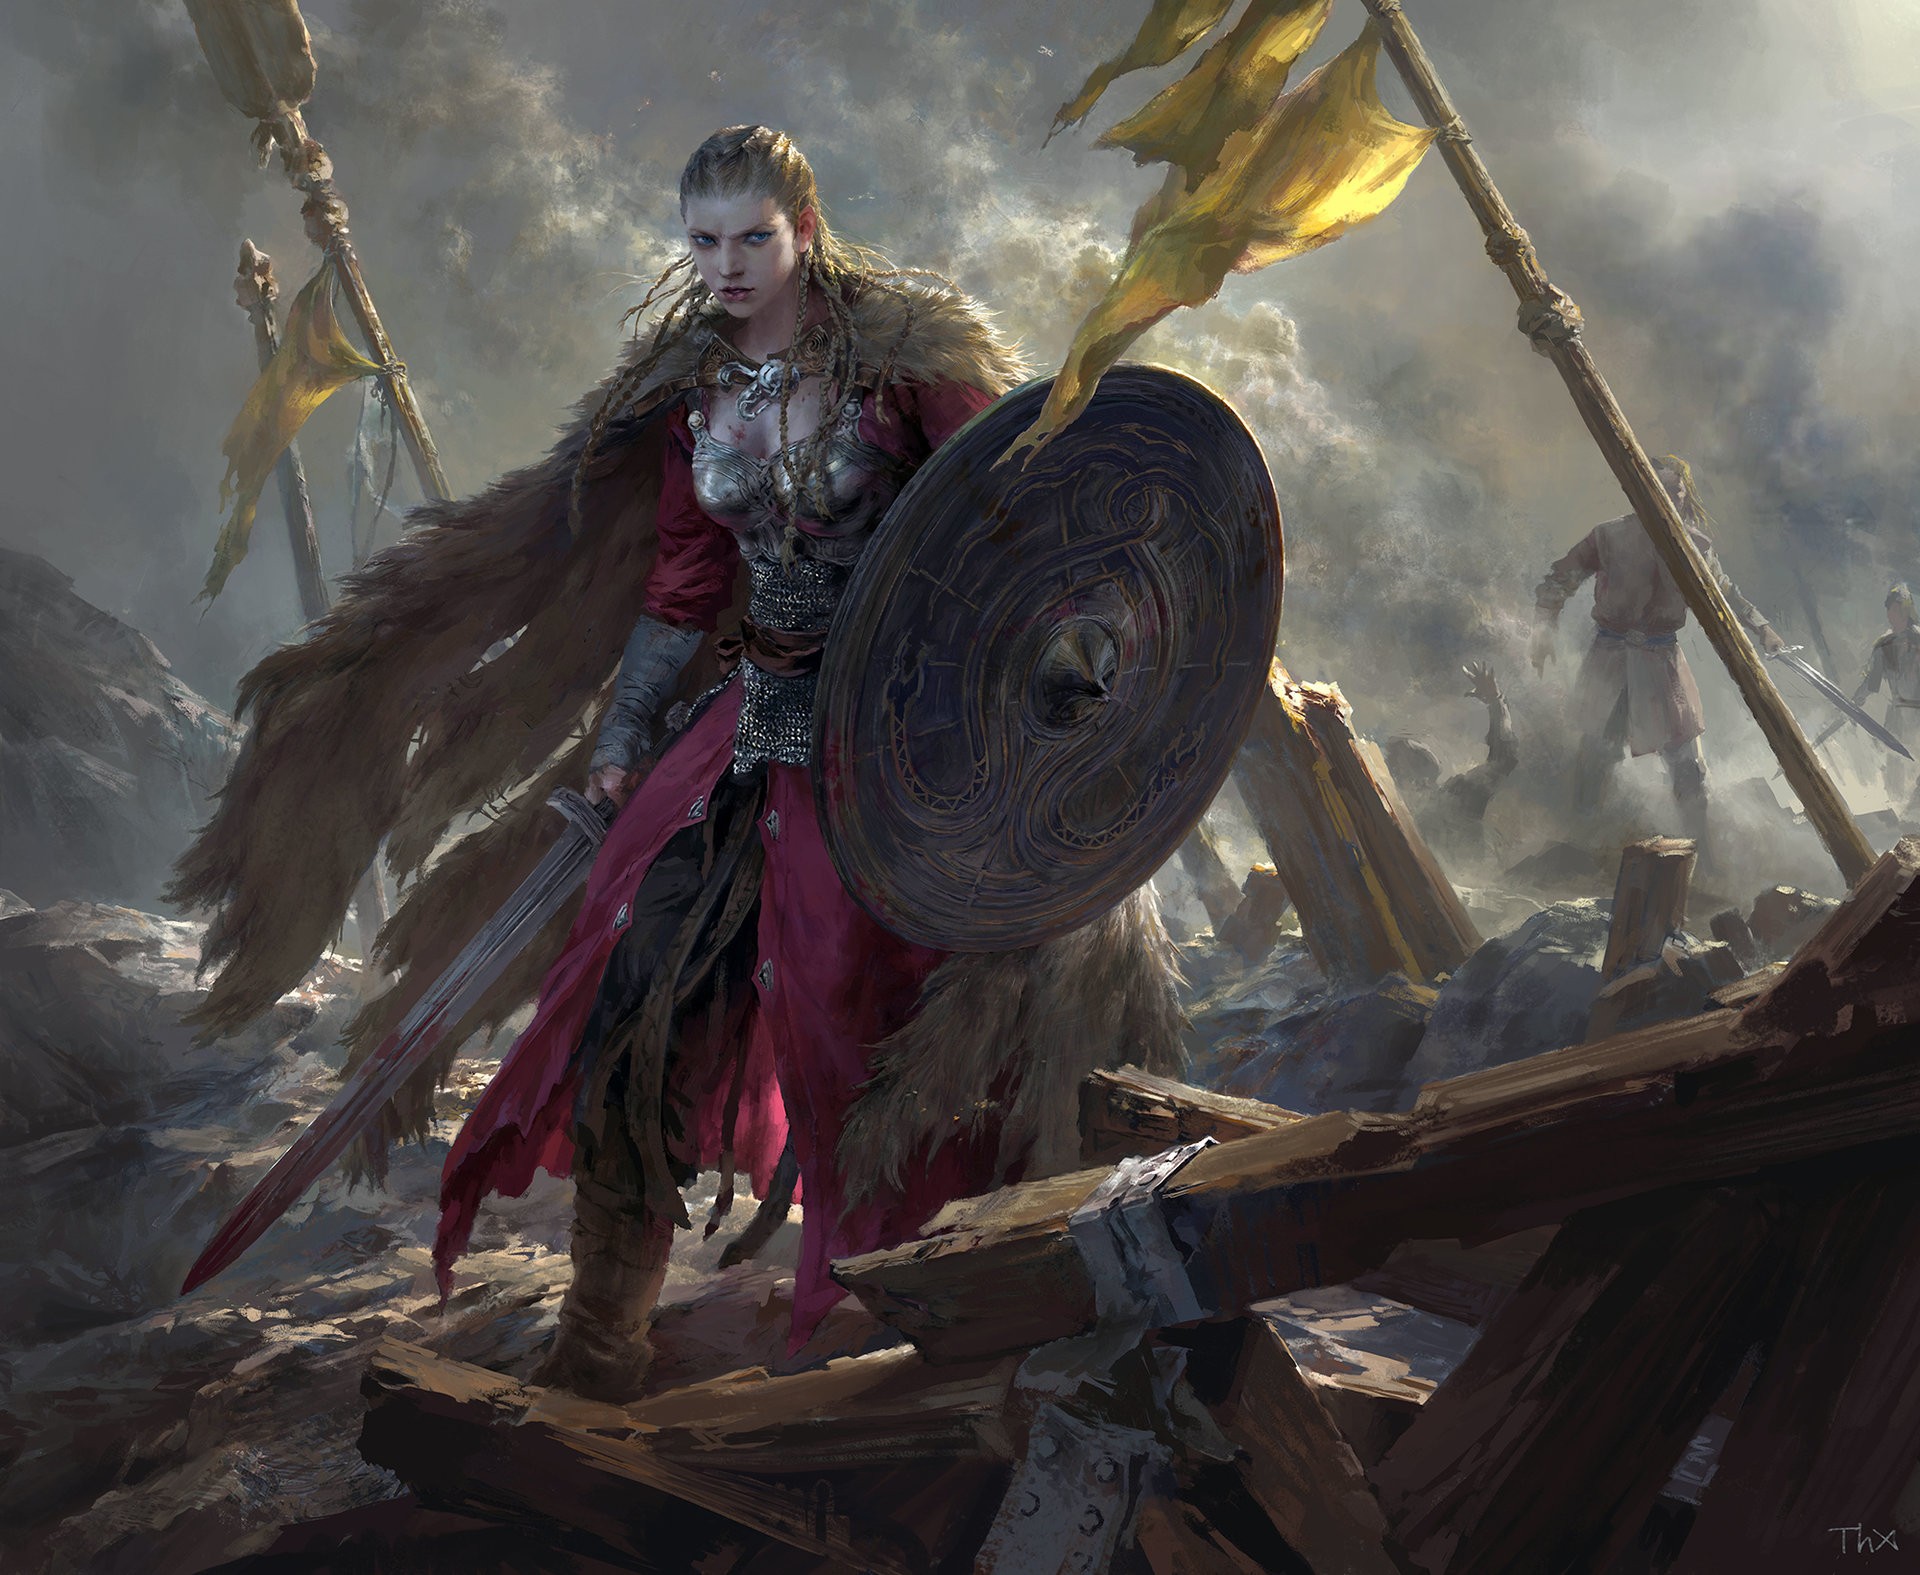 General 1920x1575 fantasy art fantasy girl blood sword shield warrior women with swords digital art watermarked